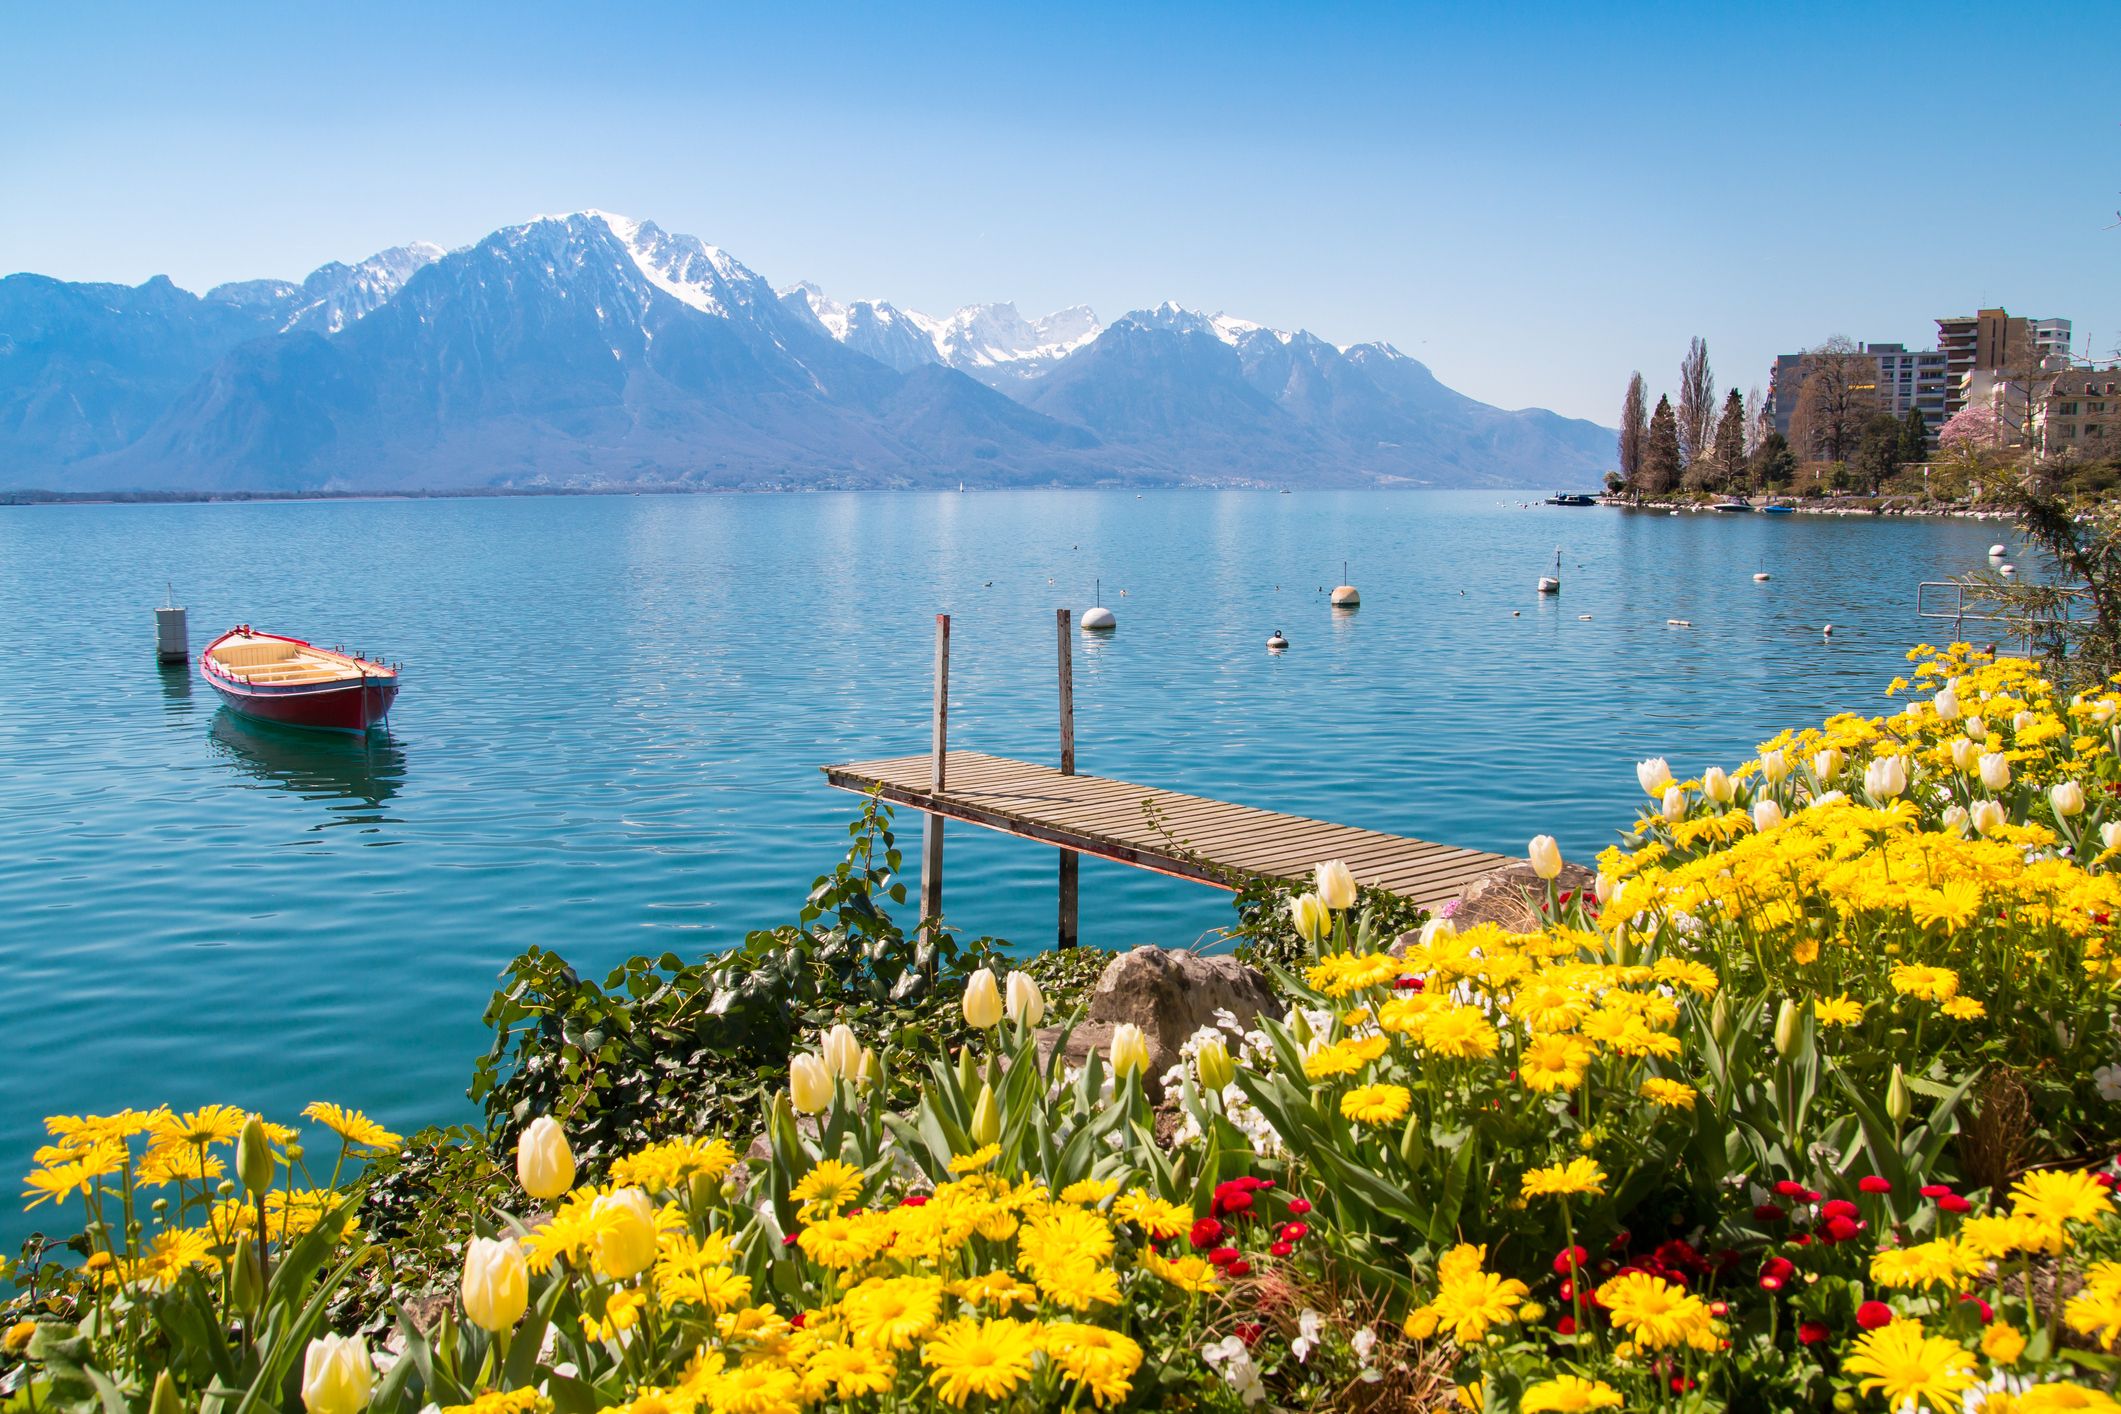 Lake Geneva, Switzerland - Europe's 10 Most Stunning Lakes